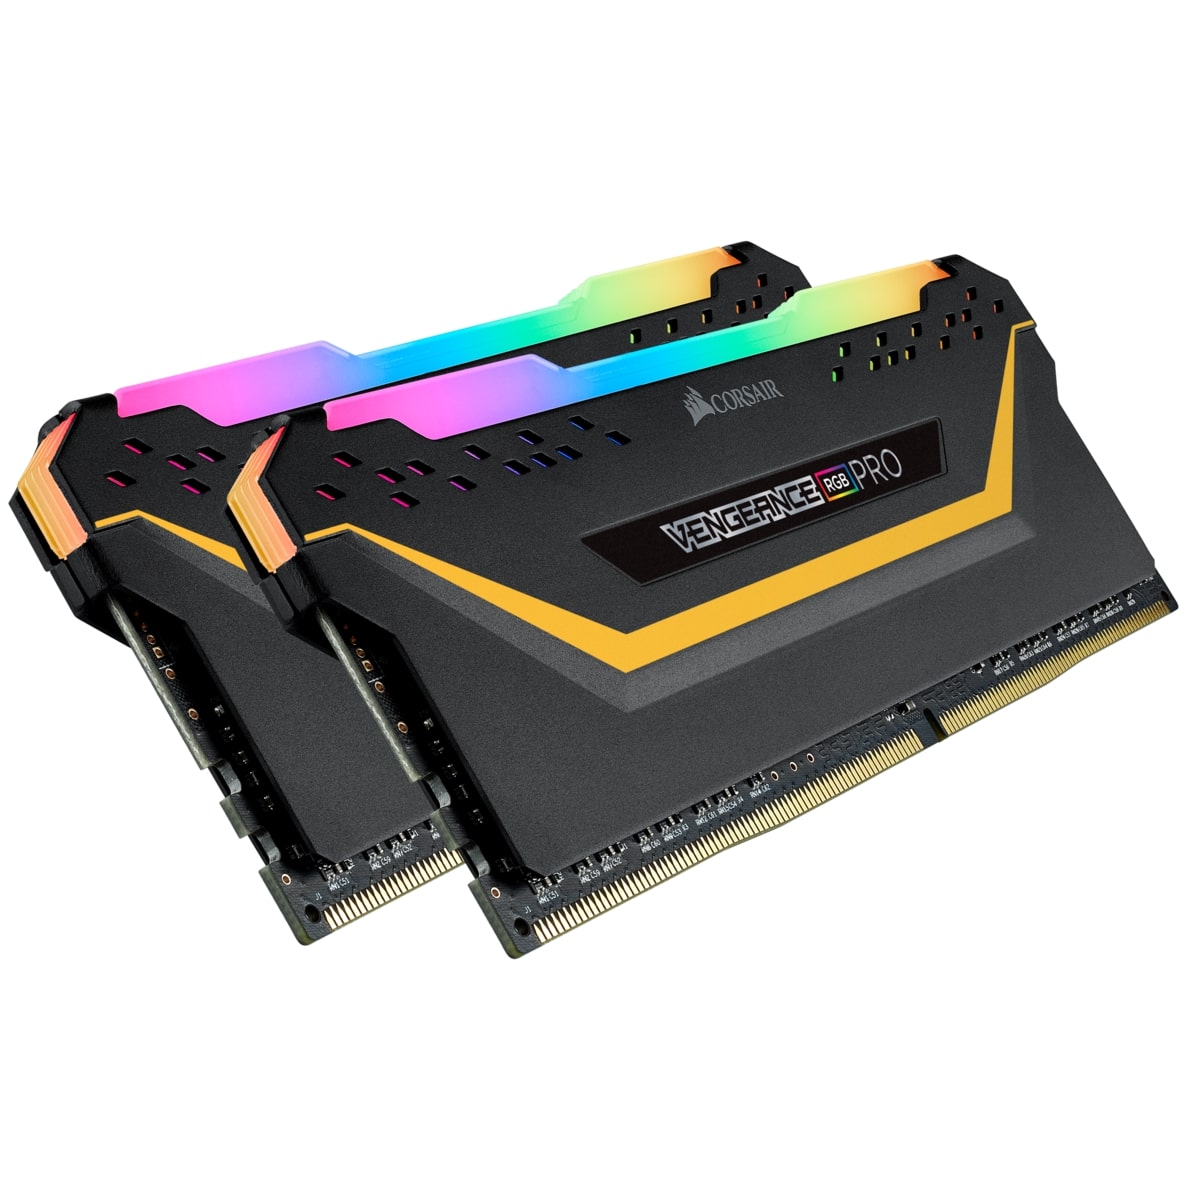 RAM CORSAIR VENGEANCE PRO RGB TUF 16GB (2x8GB) DDR4 3200MHz - CMW16GX4M2C3200C16-TUF - songphuong.vn